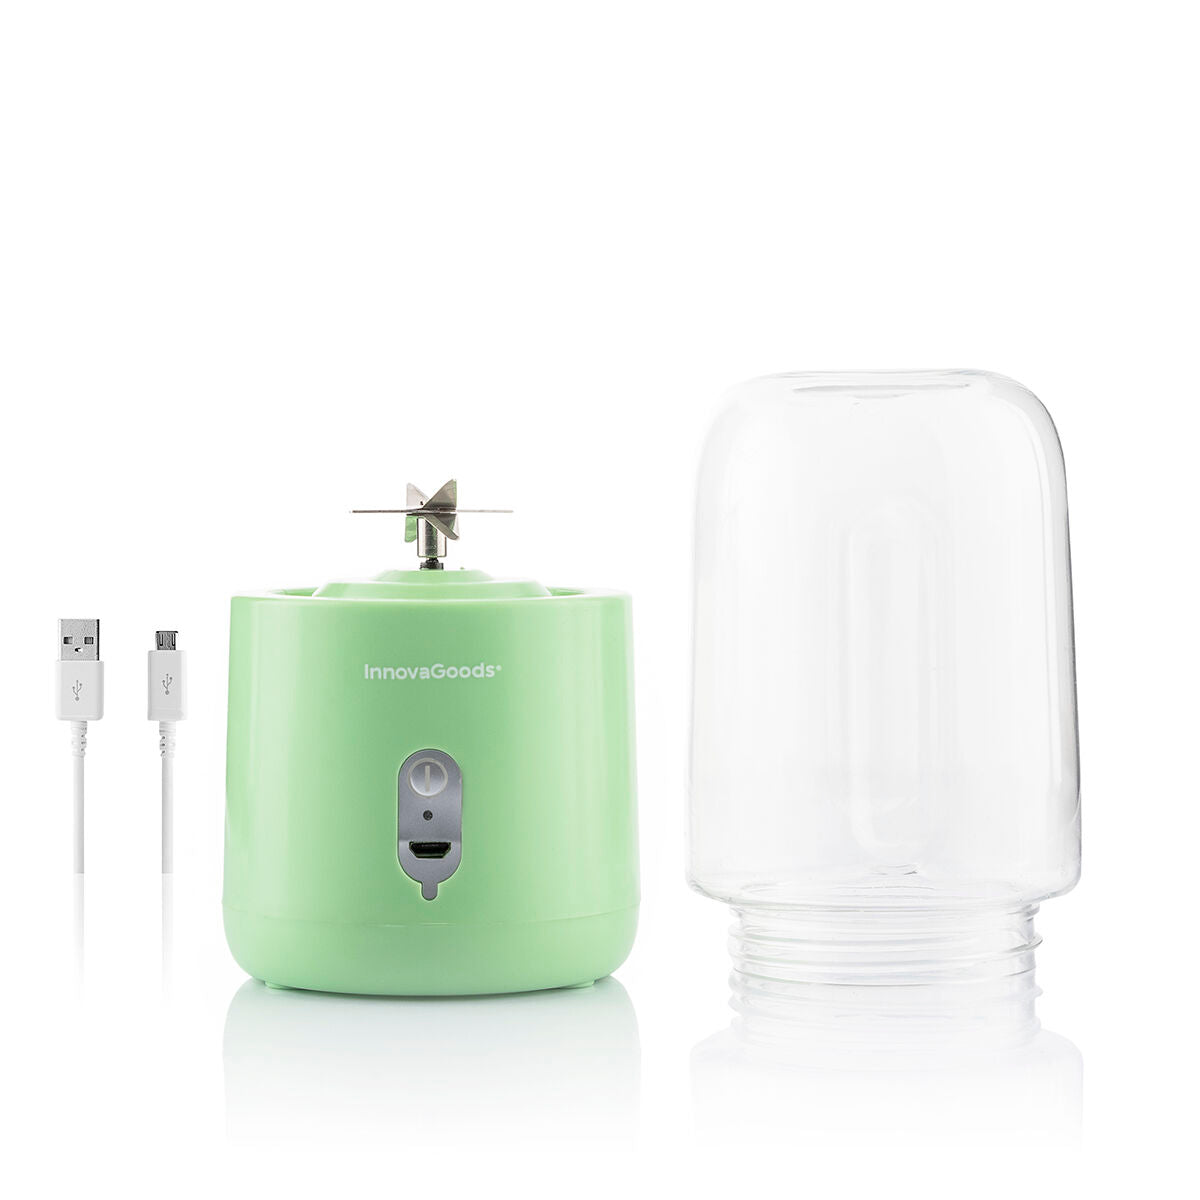 Portable Rechargeable Cup Blender Blendyr InnovaGoods